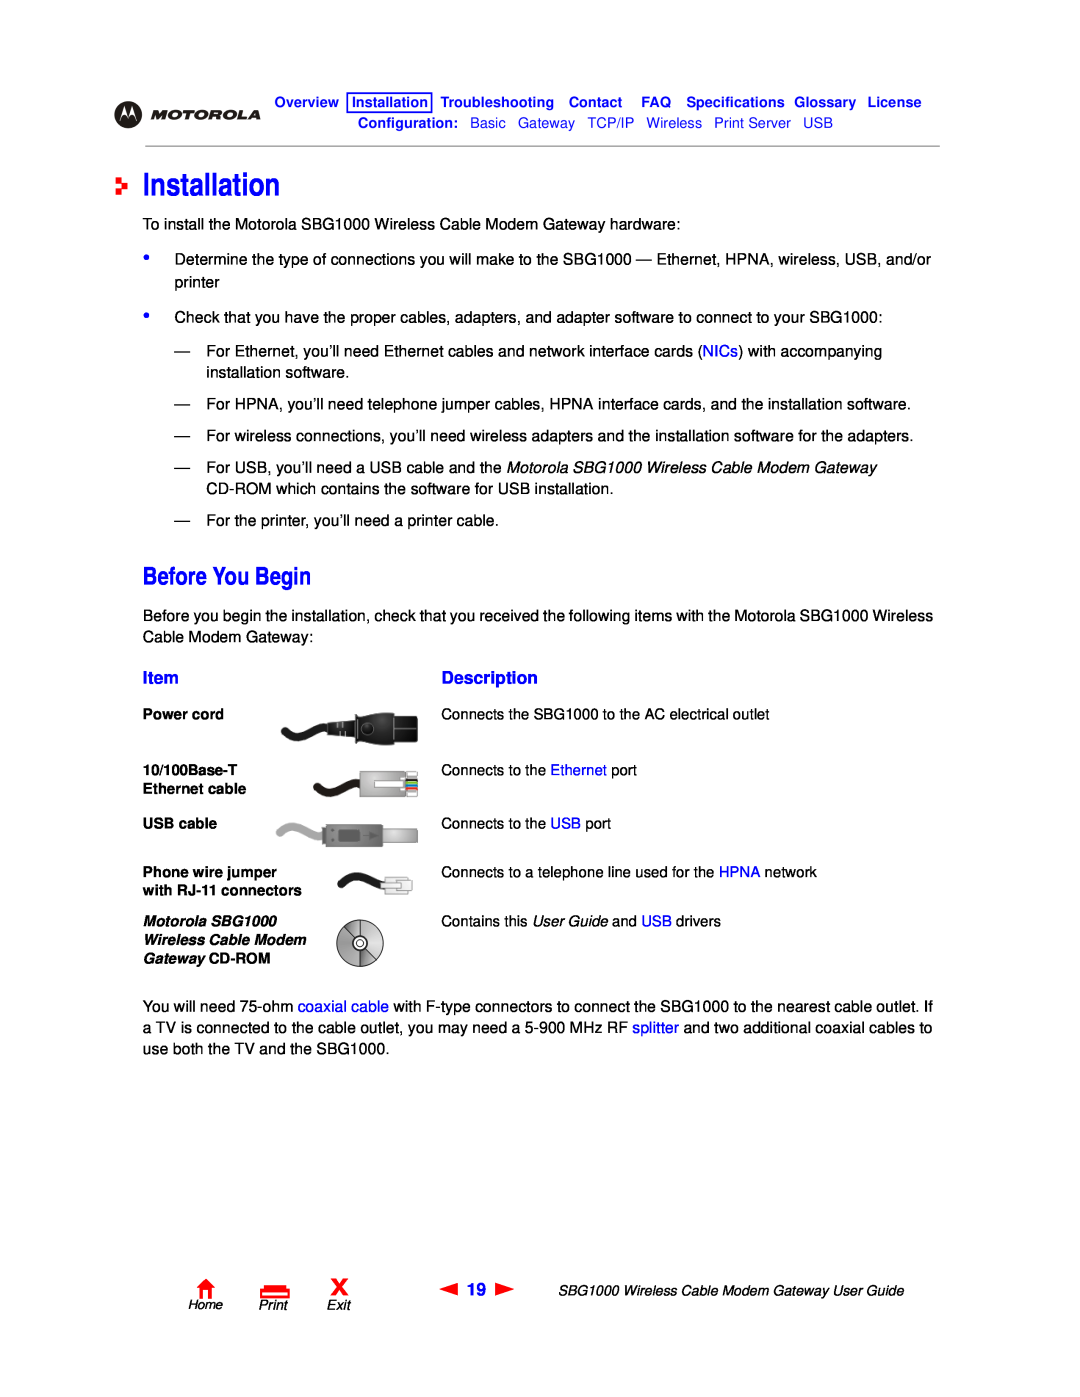 Motorola SBG1000 manual Installation, Before You Begin, Description 